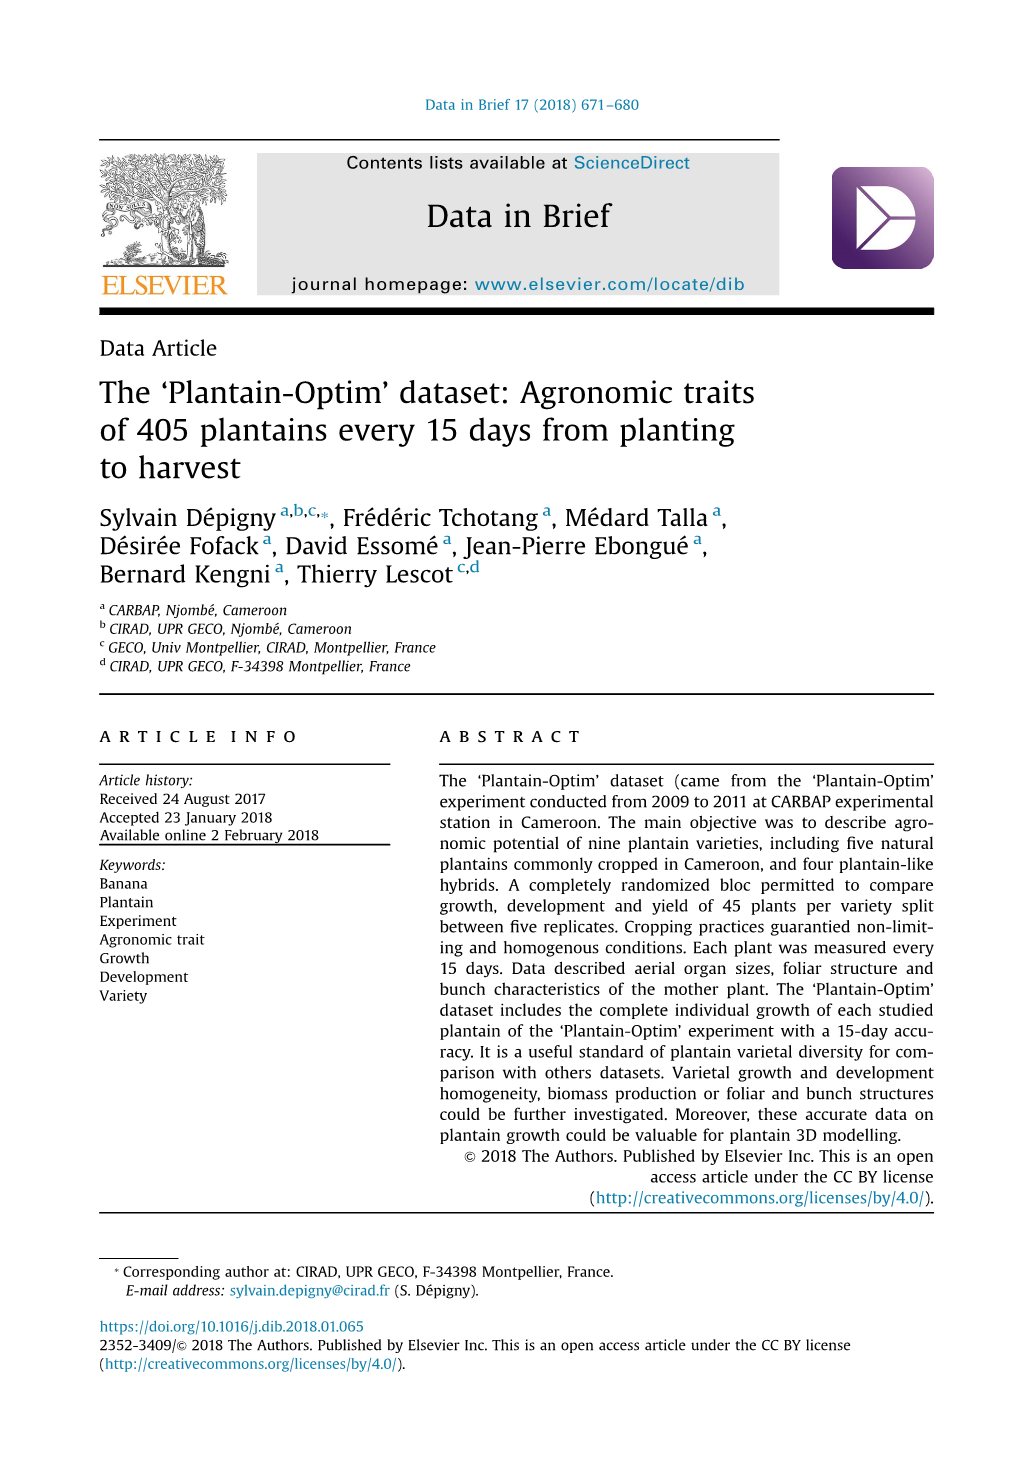 The 'Plantain-Optim' Dataset Agronomic Traits of 405 Plantains